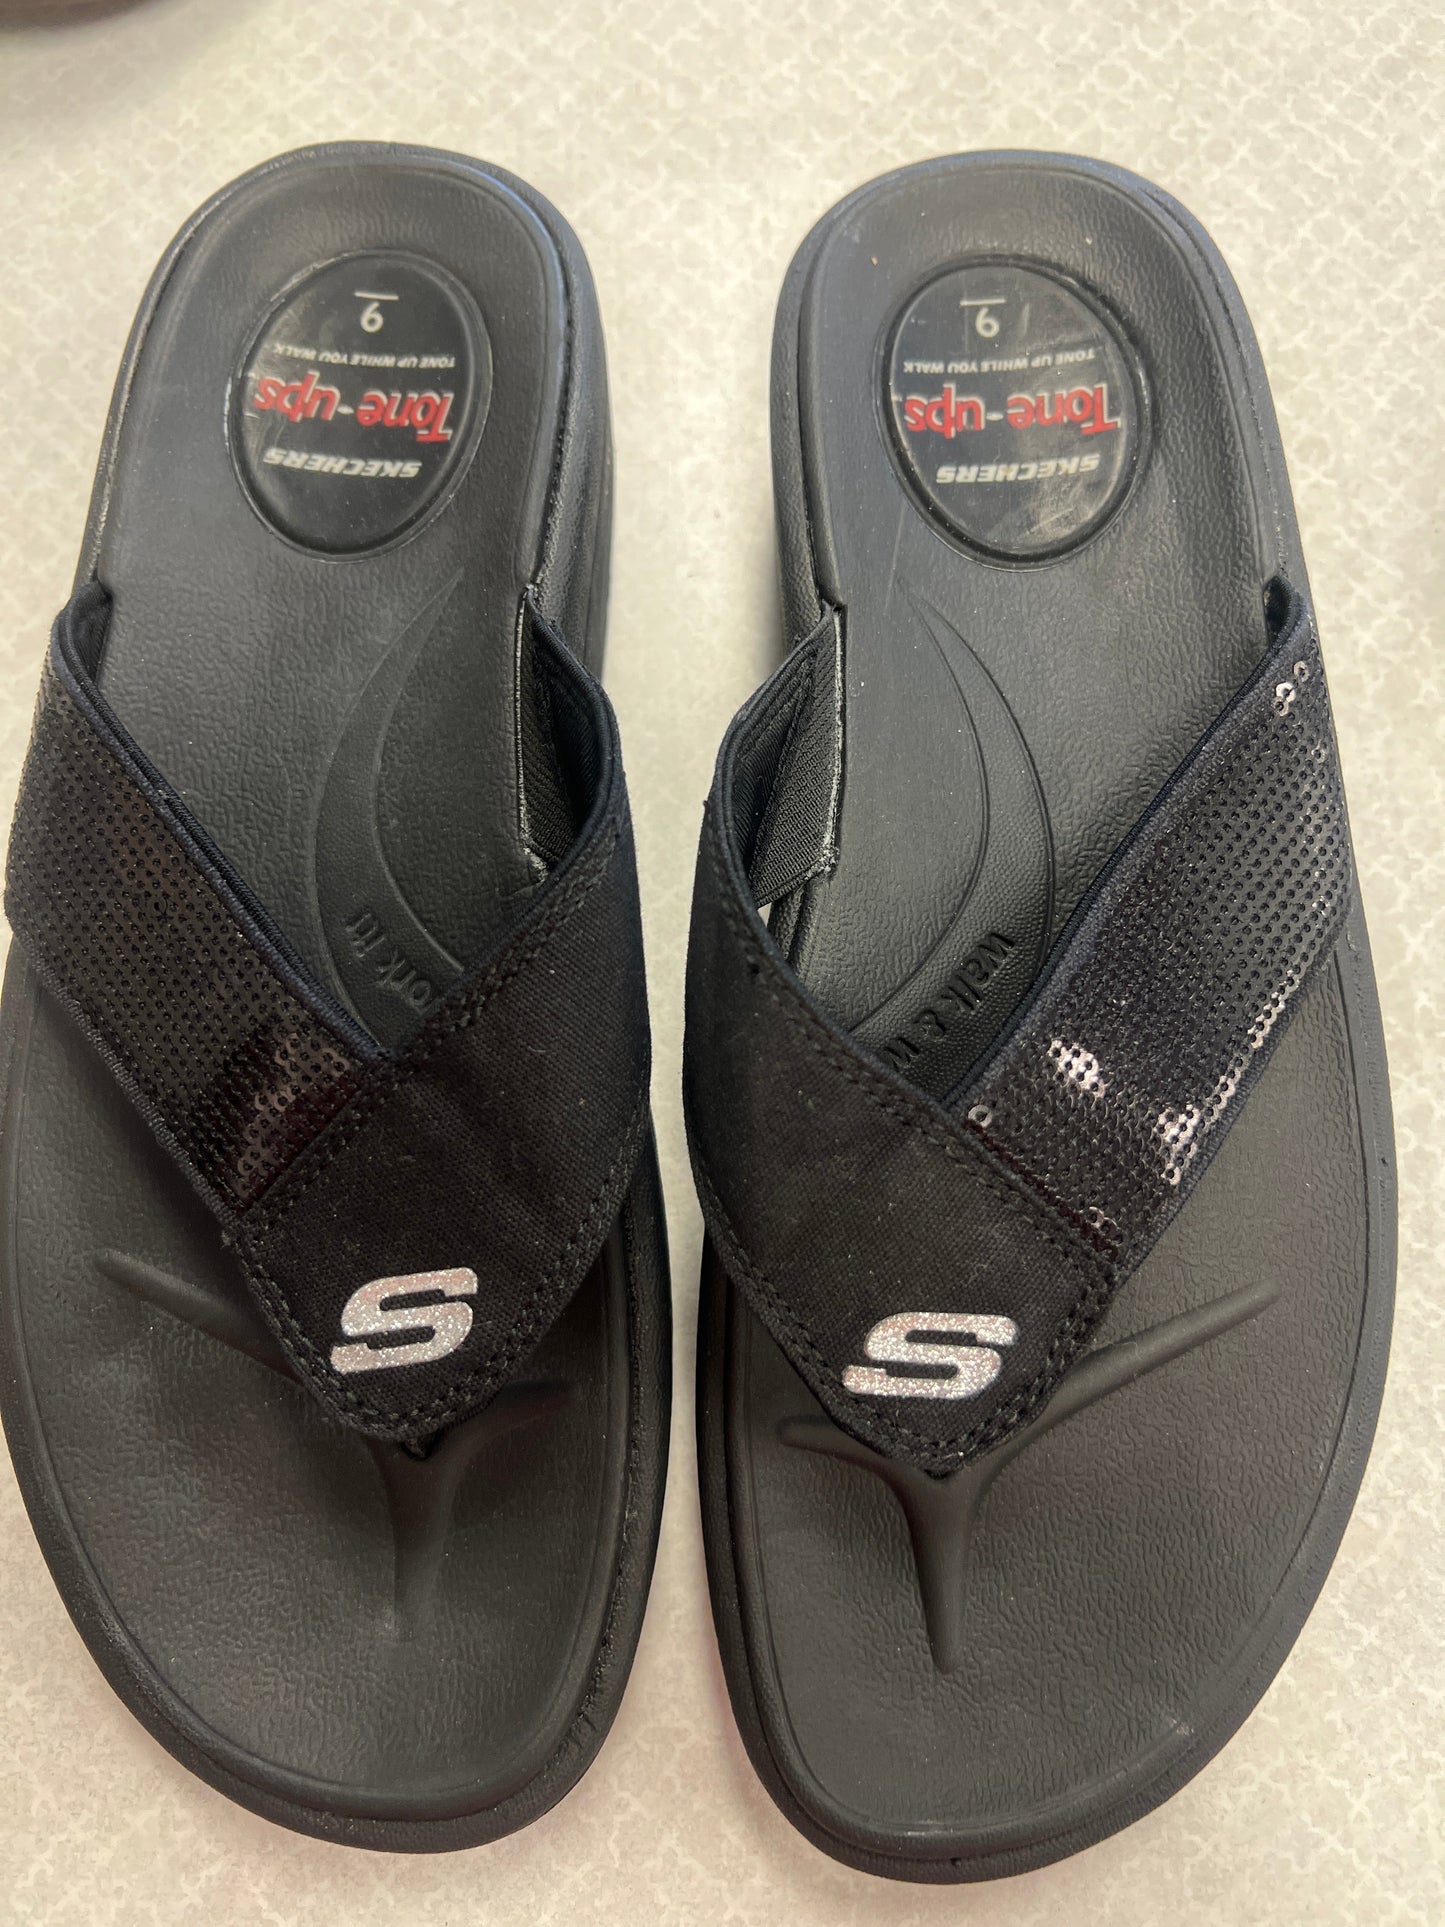 Sandals Heels Wedge By Skechers  Size: 9